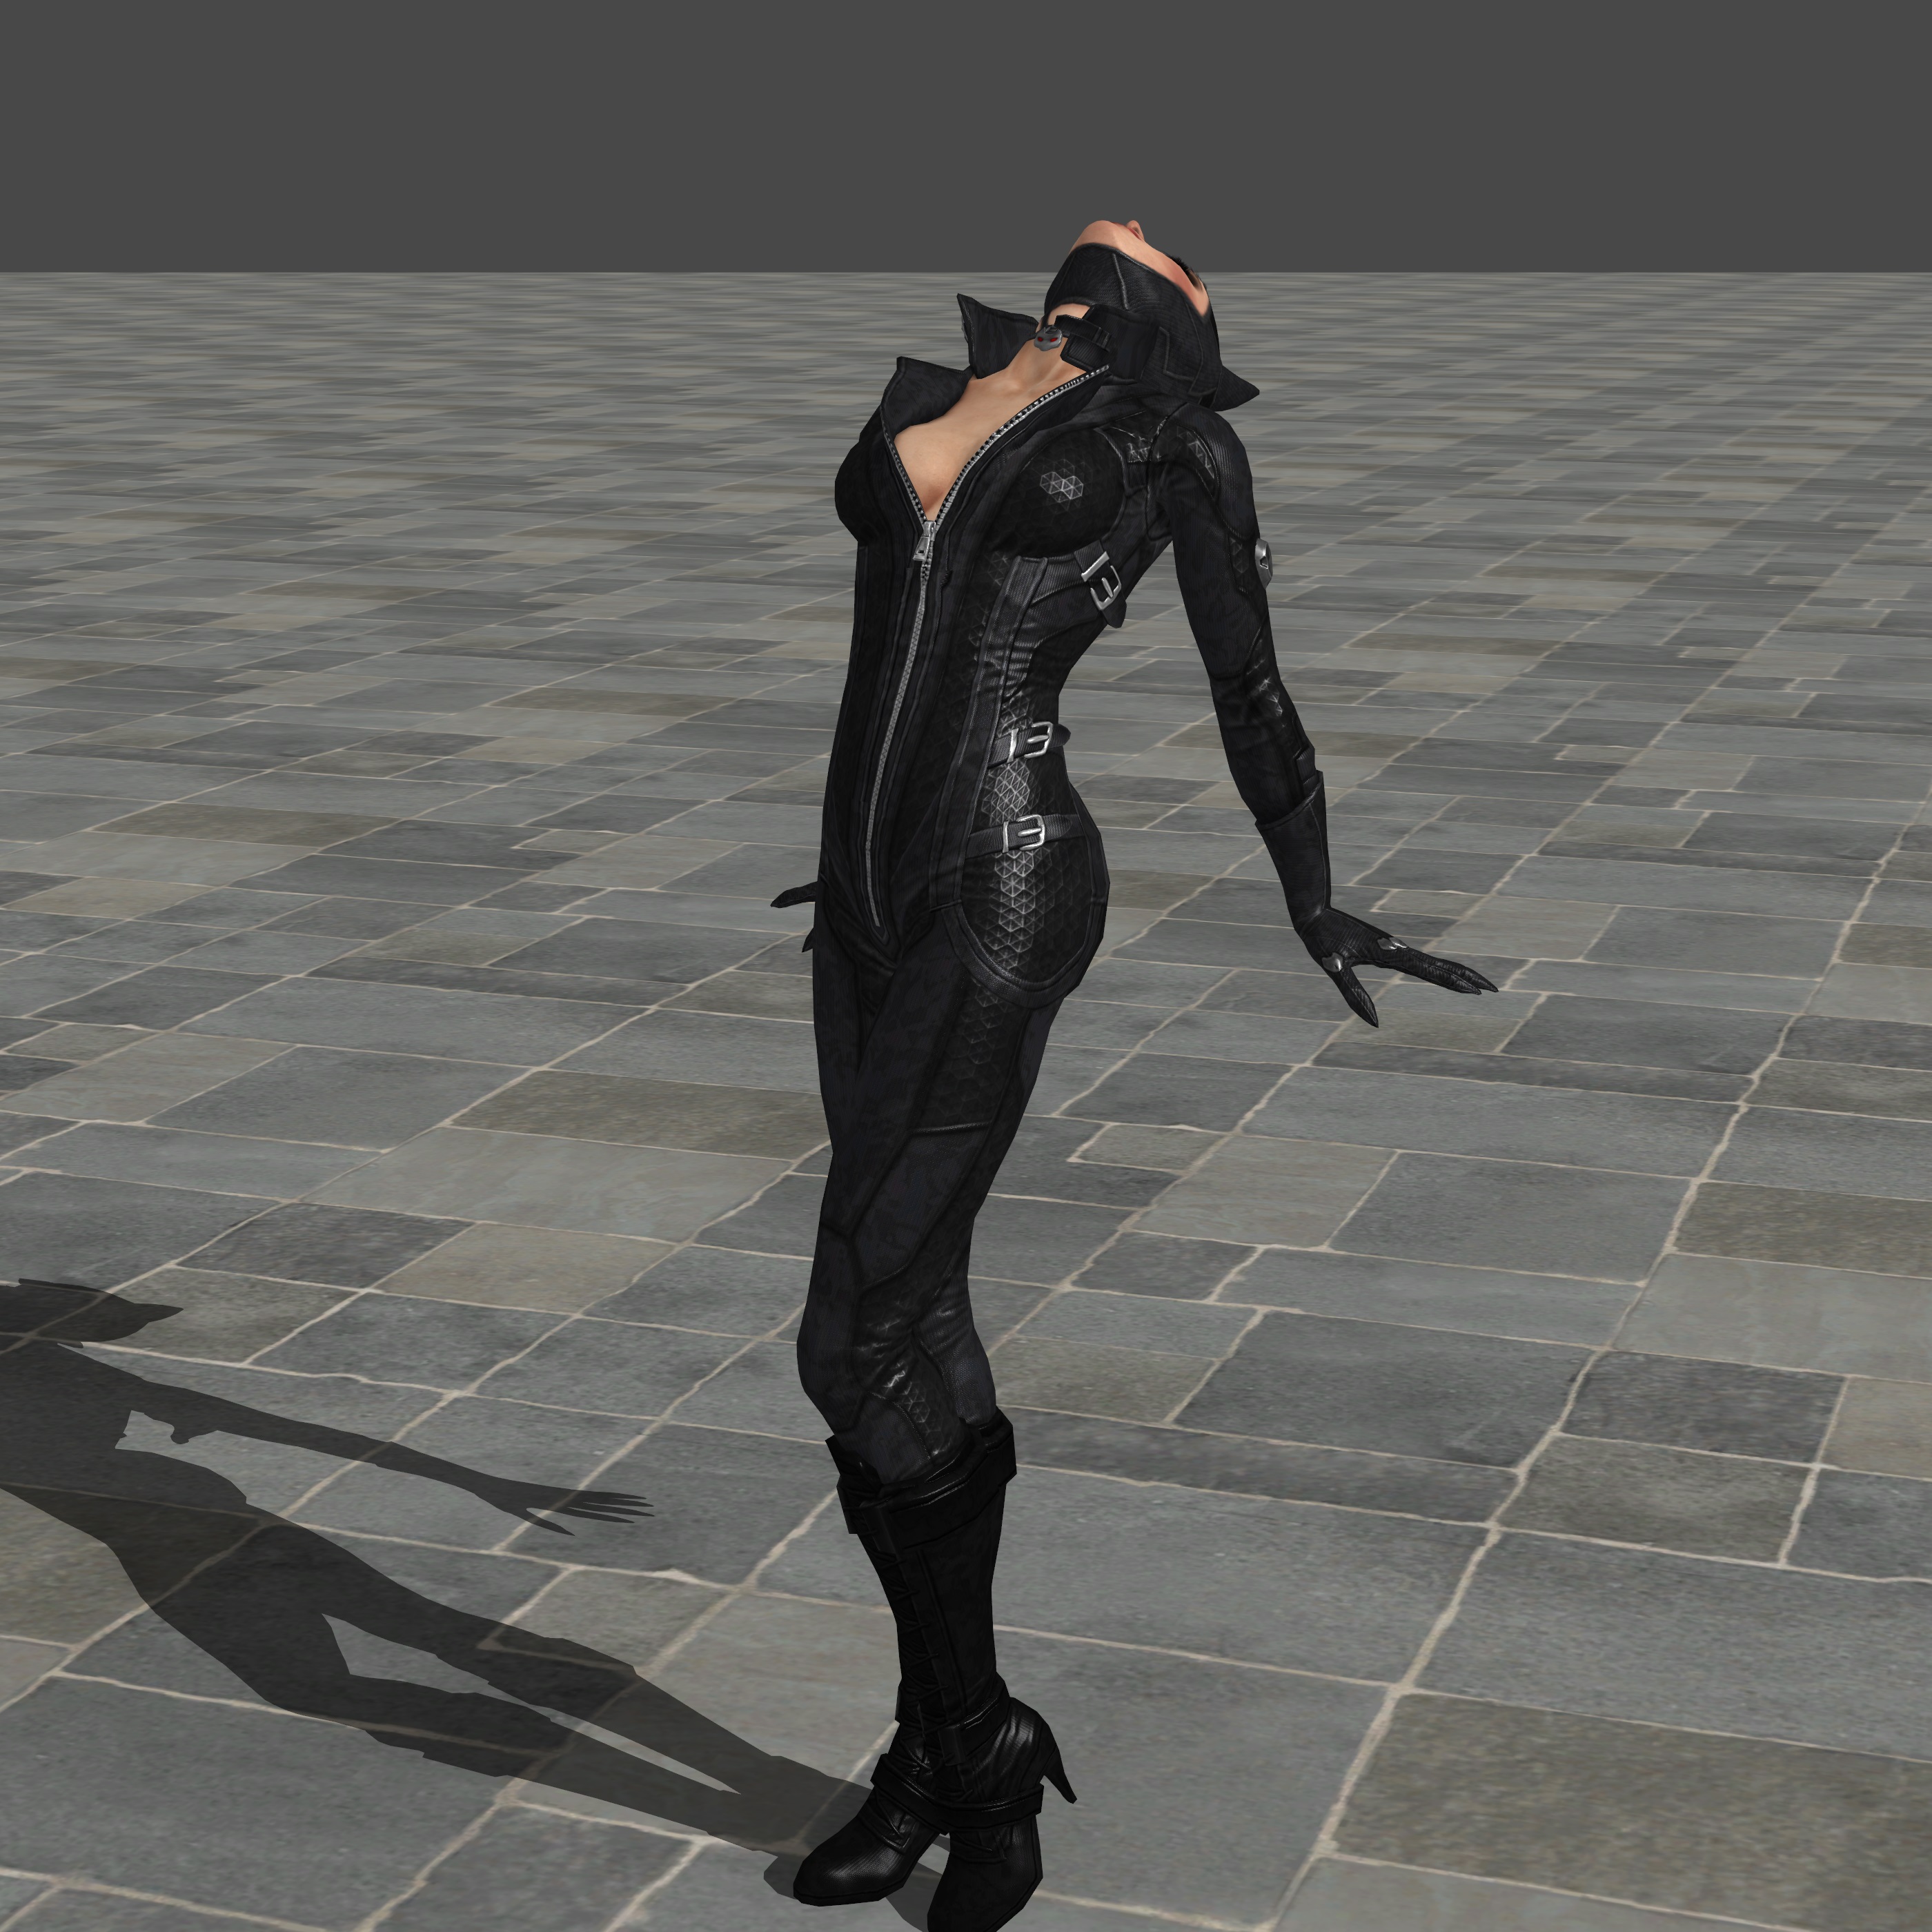 Catwoman Full Body Pose 04 By Subzero91 On Deviantart